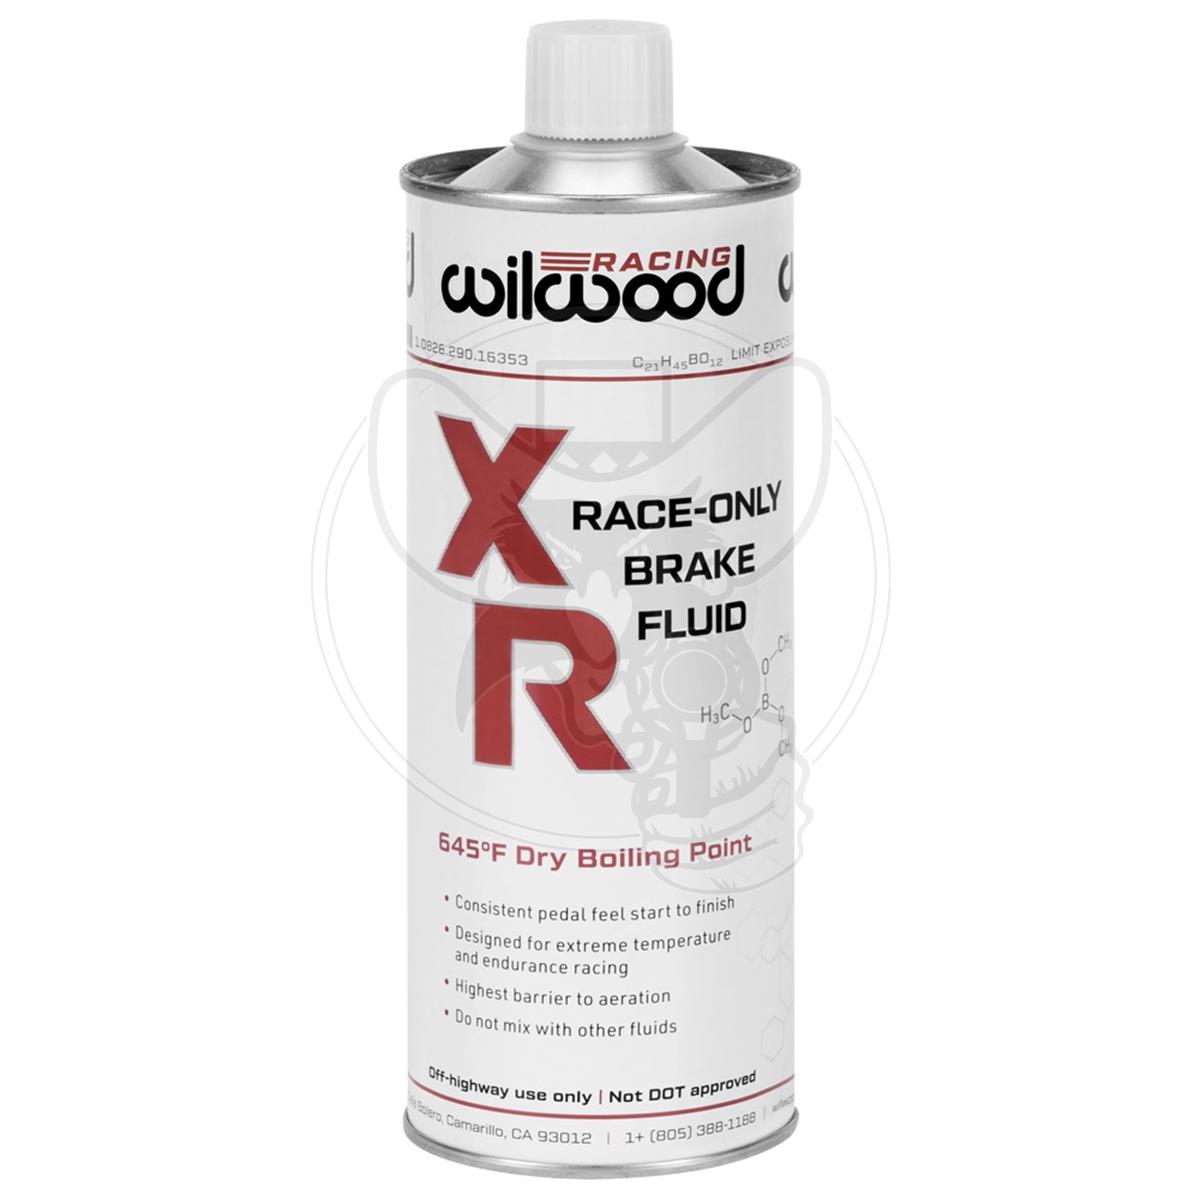 WILWOOD XR RACING BRAKE FLUID 645°F/340°C DRY BOILING POINT 500ML